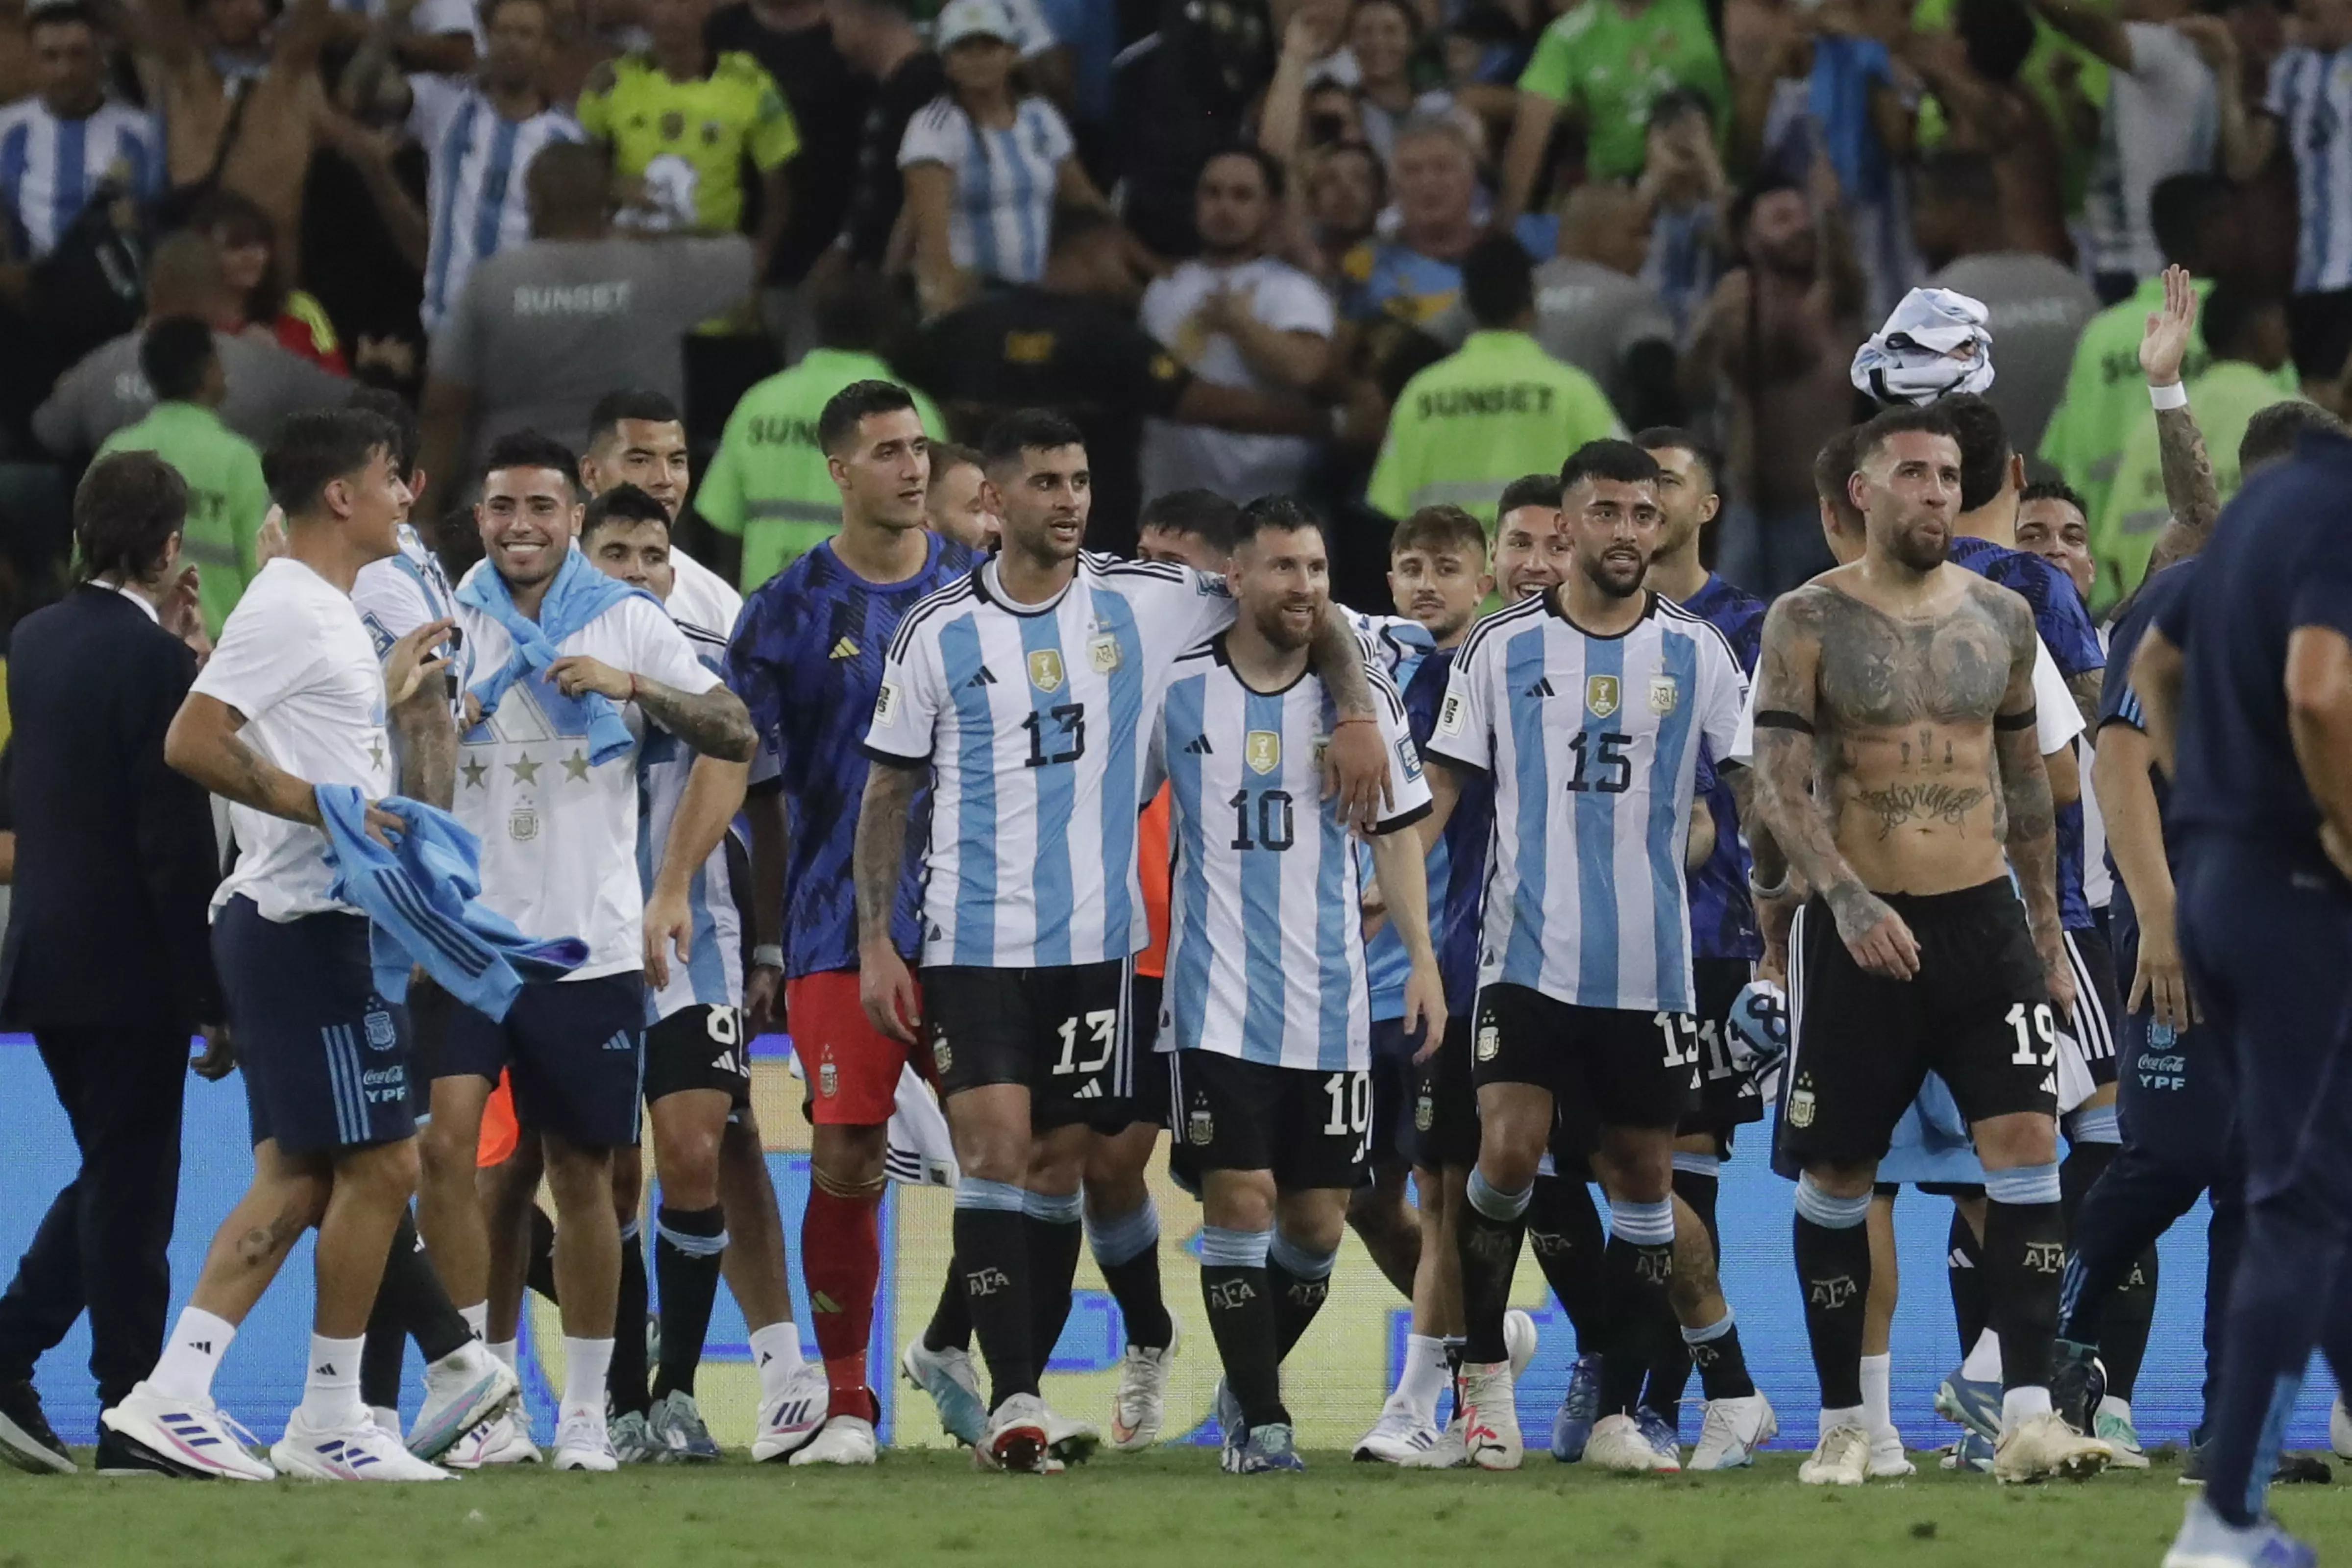 Argentina football team